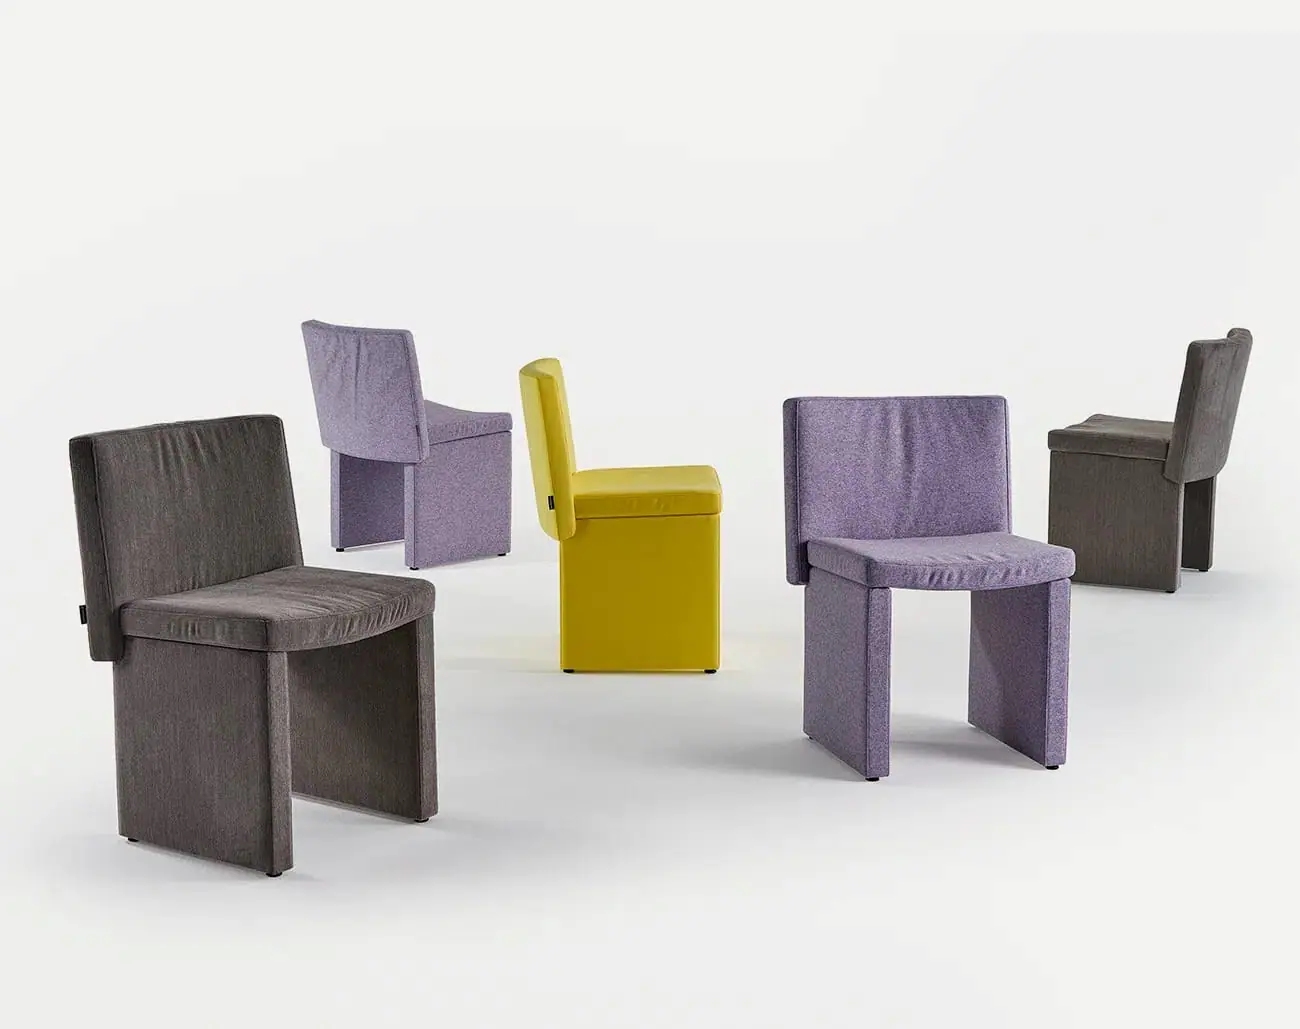 sancal-producto-bench-chair-table-cita-004